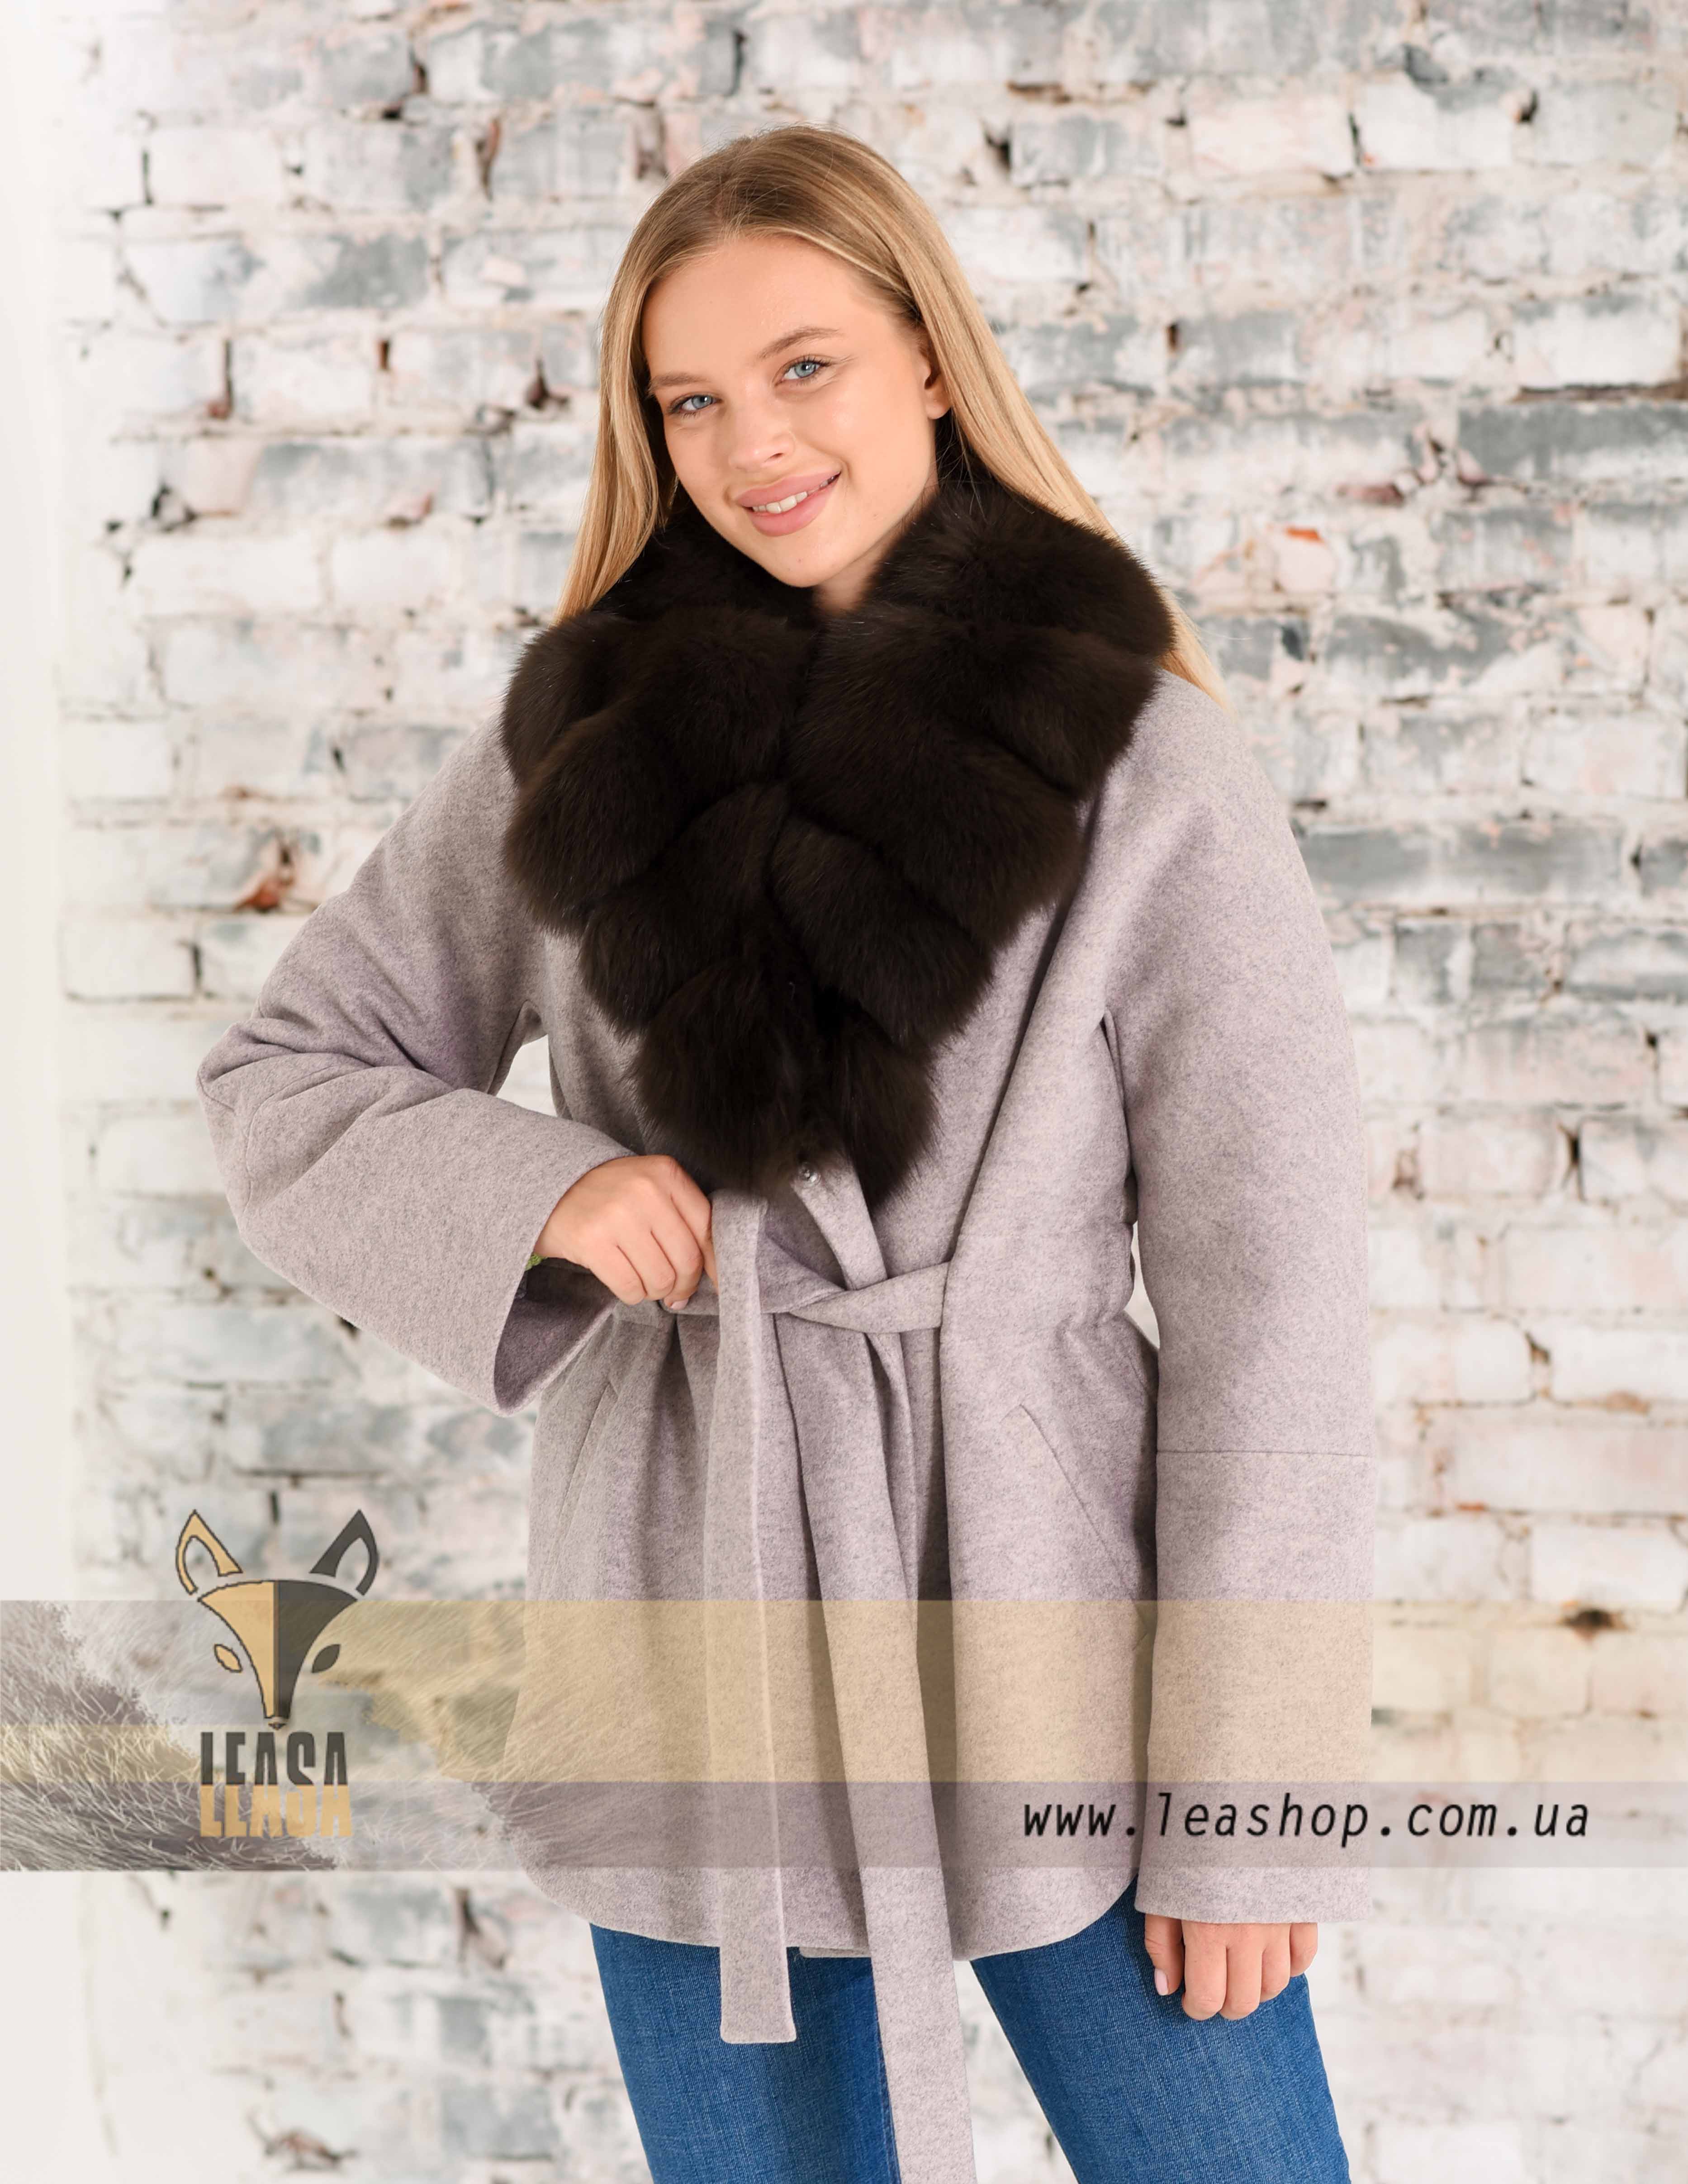 Women's powder colour coat with fur collar